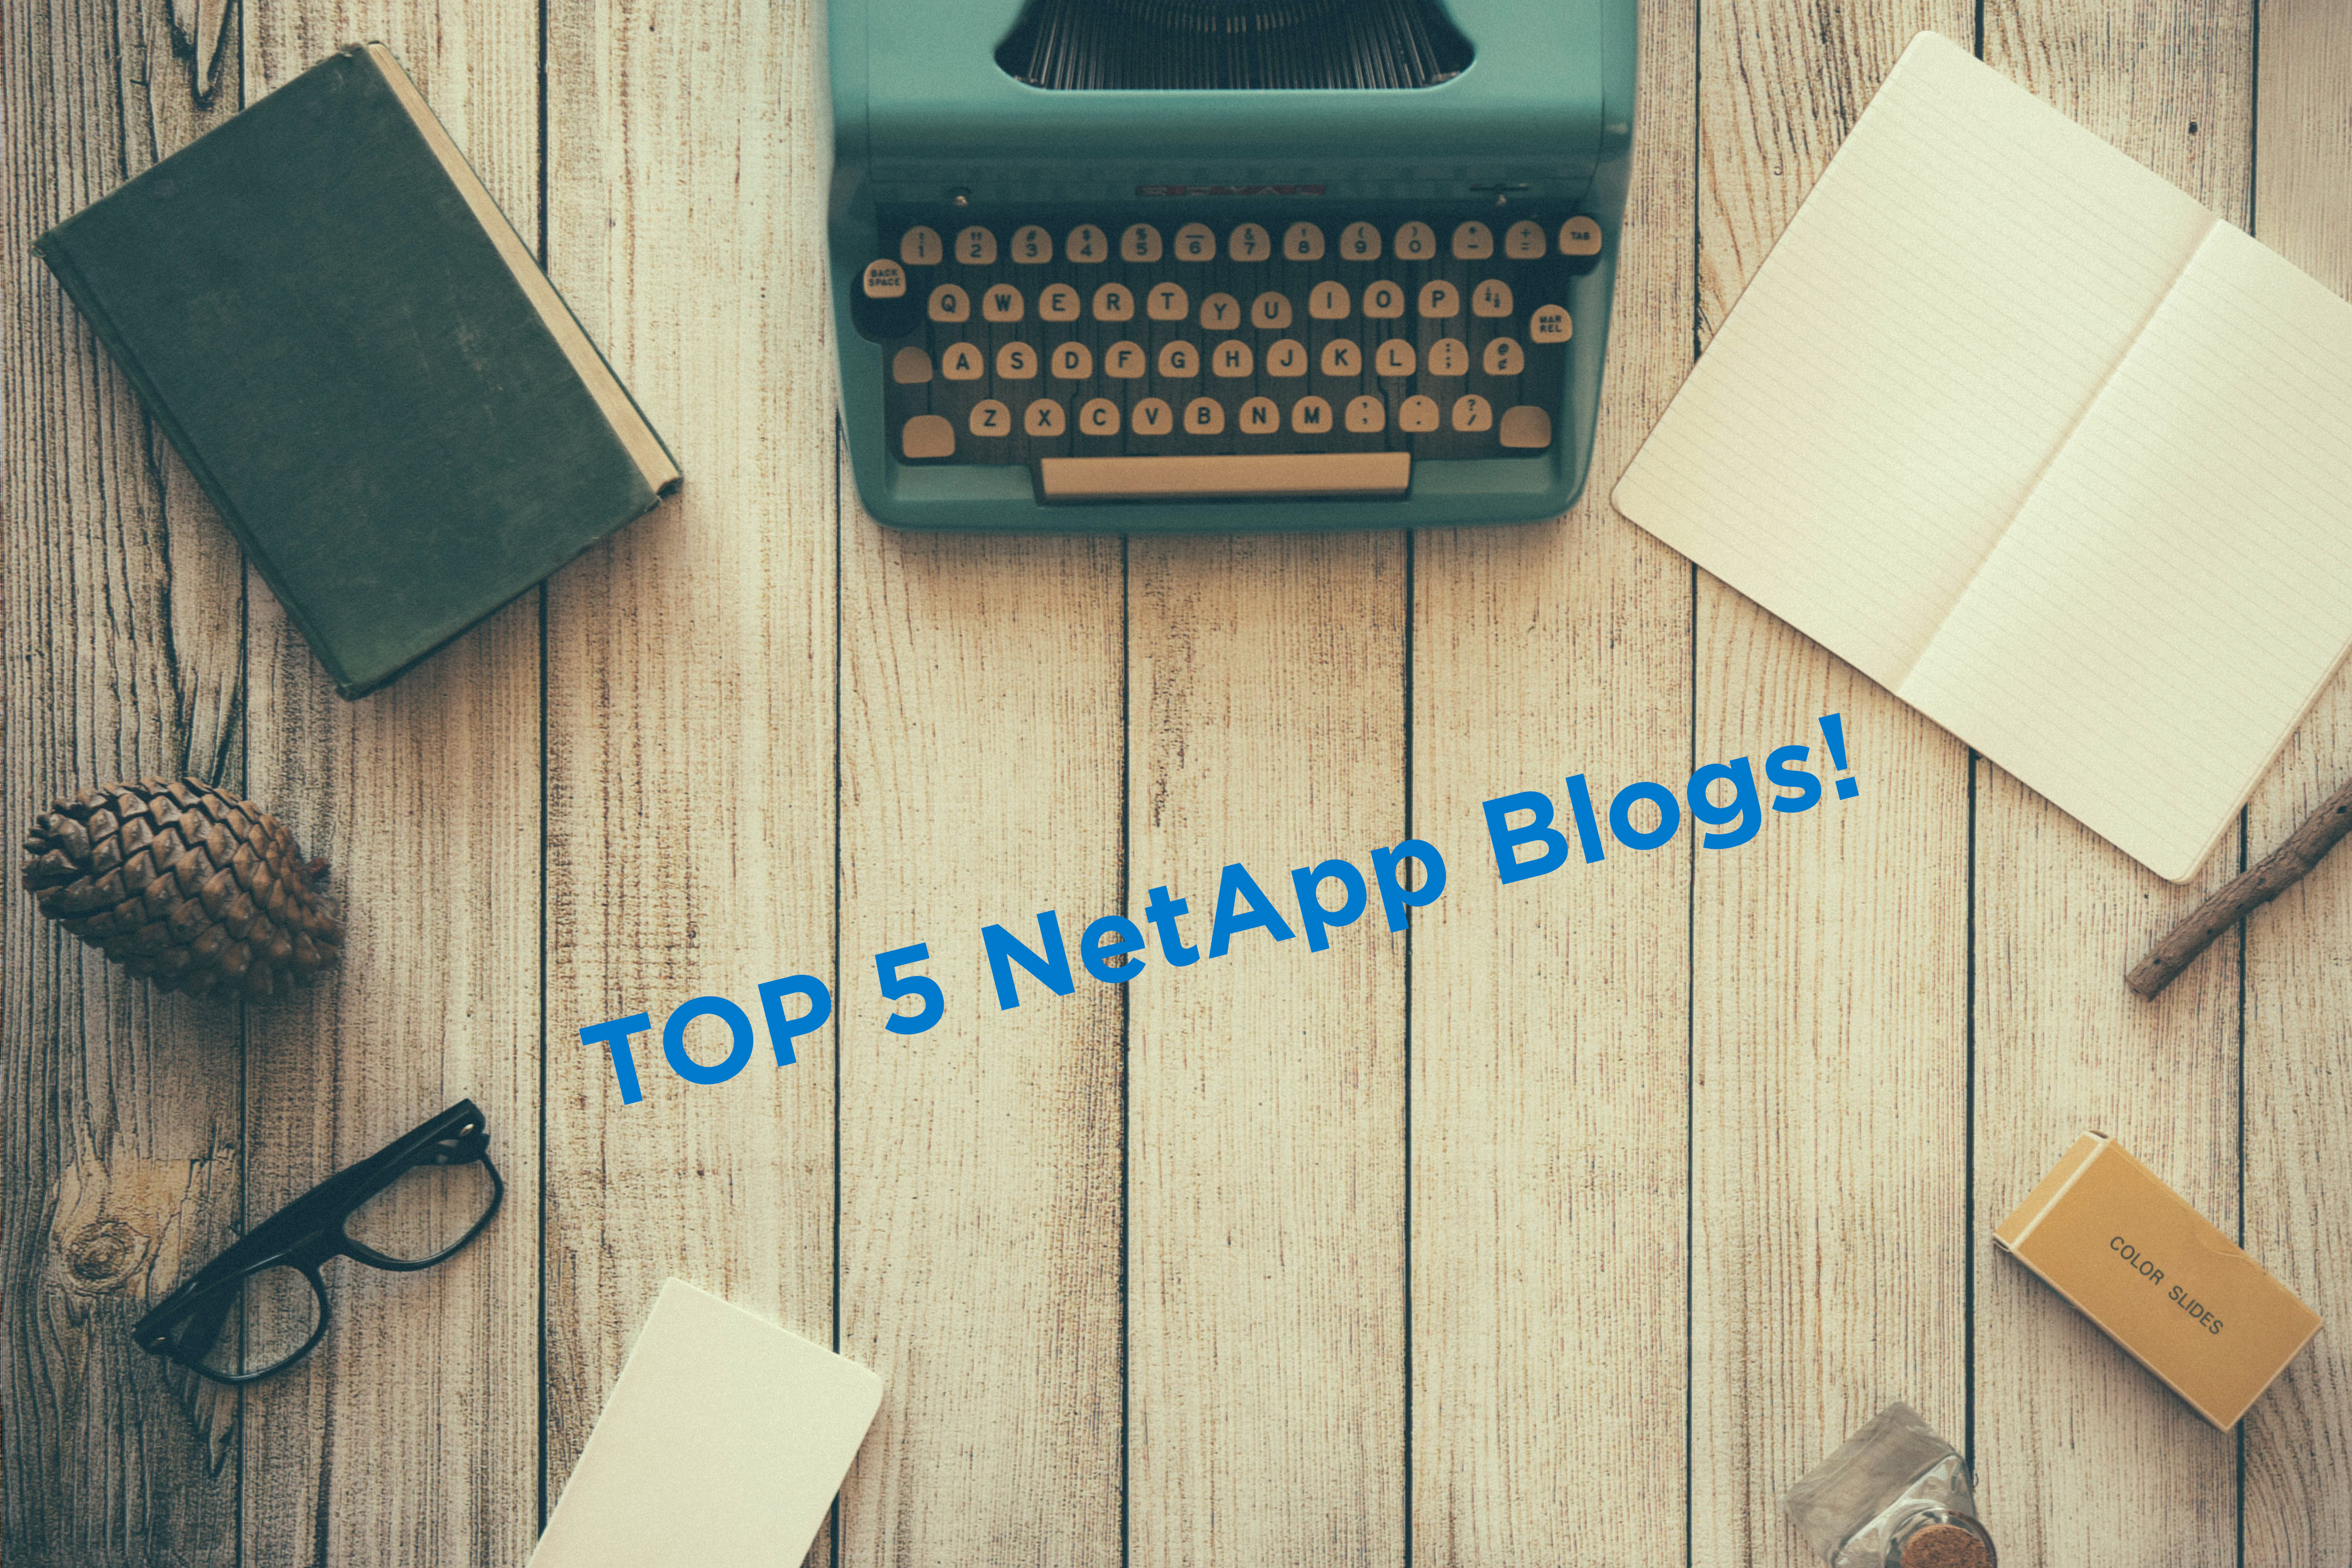 TOP 5 NetApp Blogs